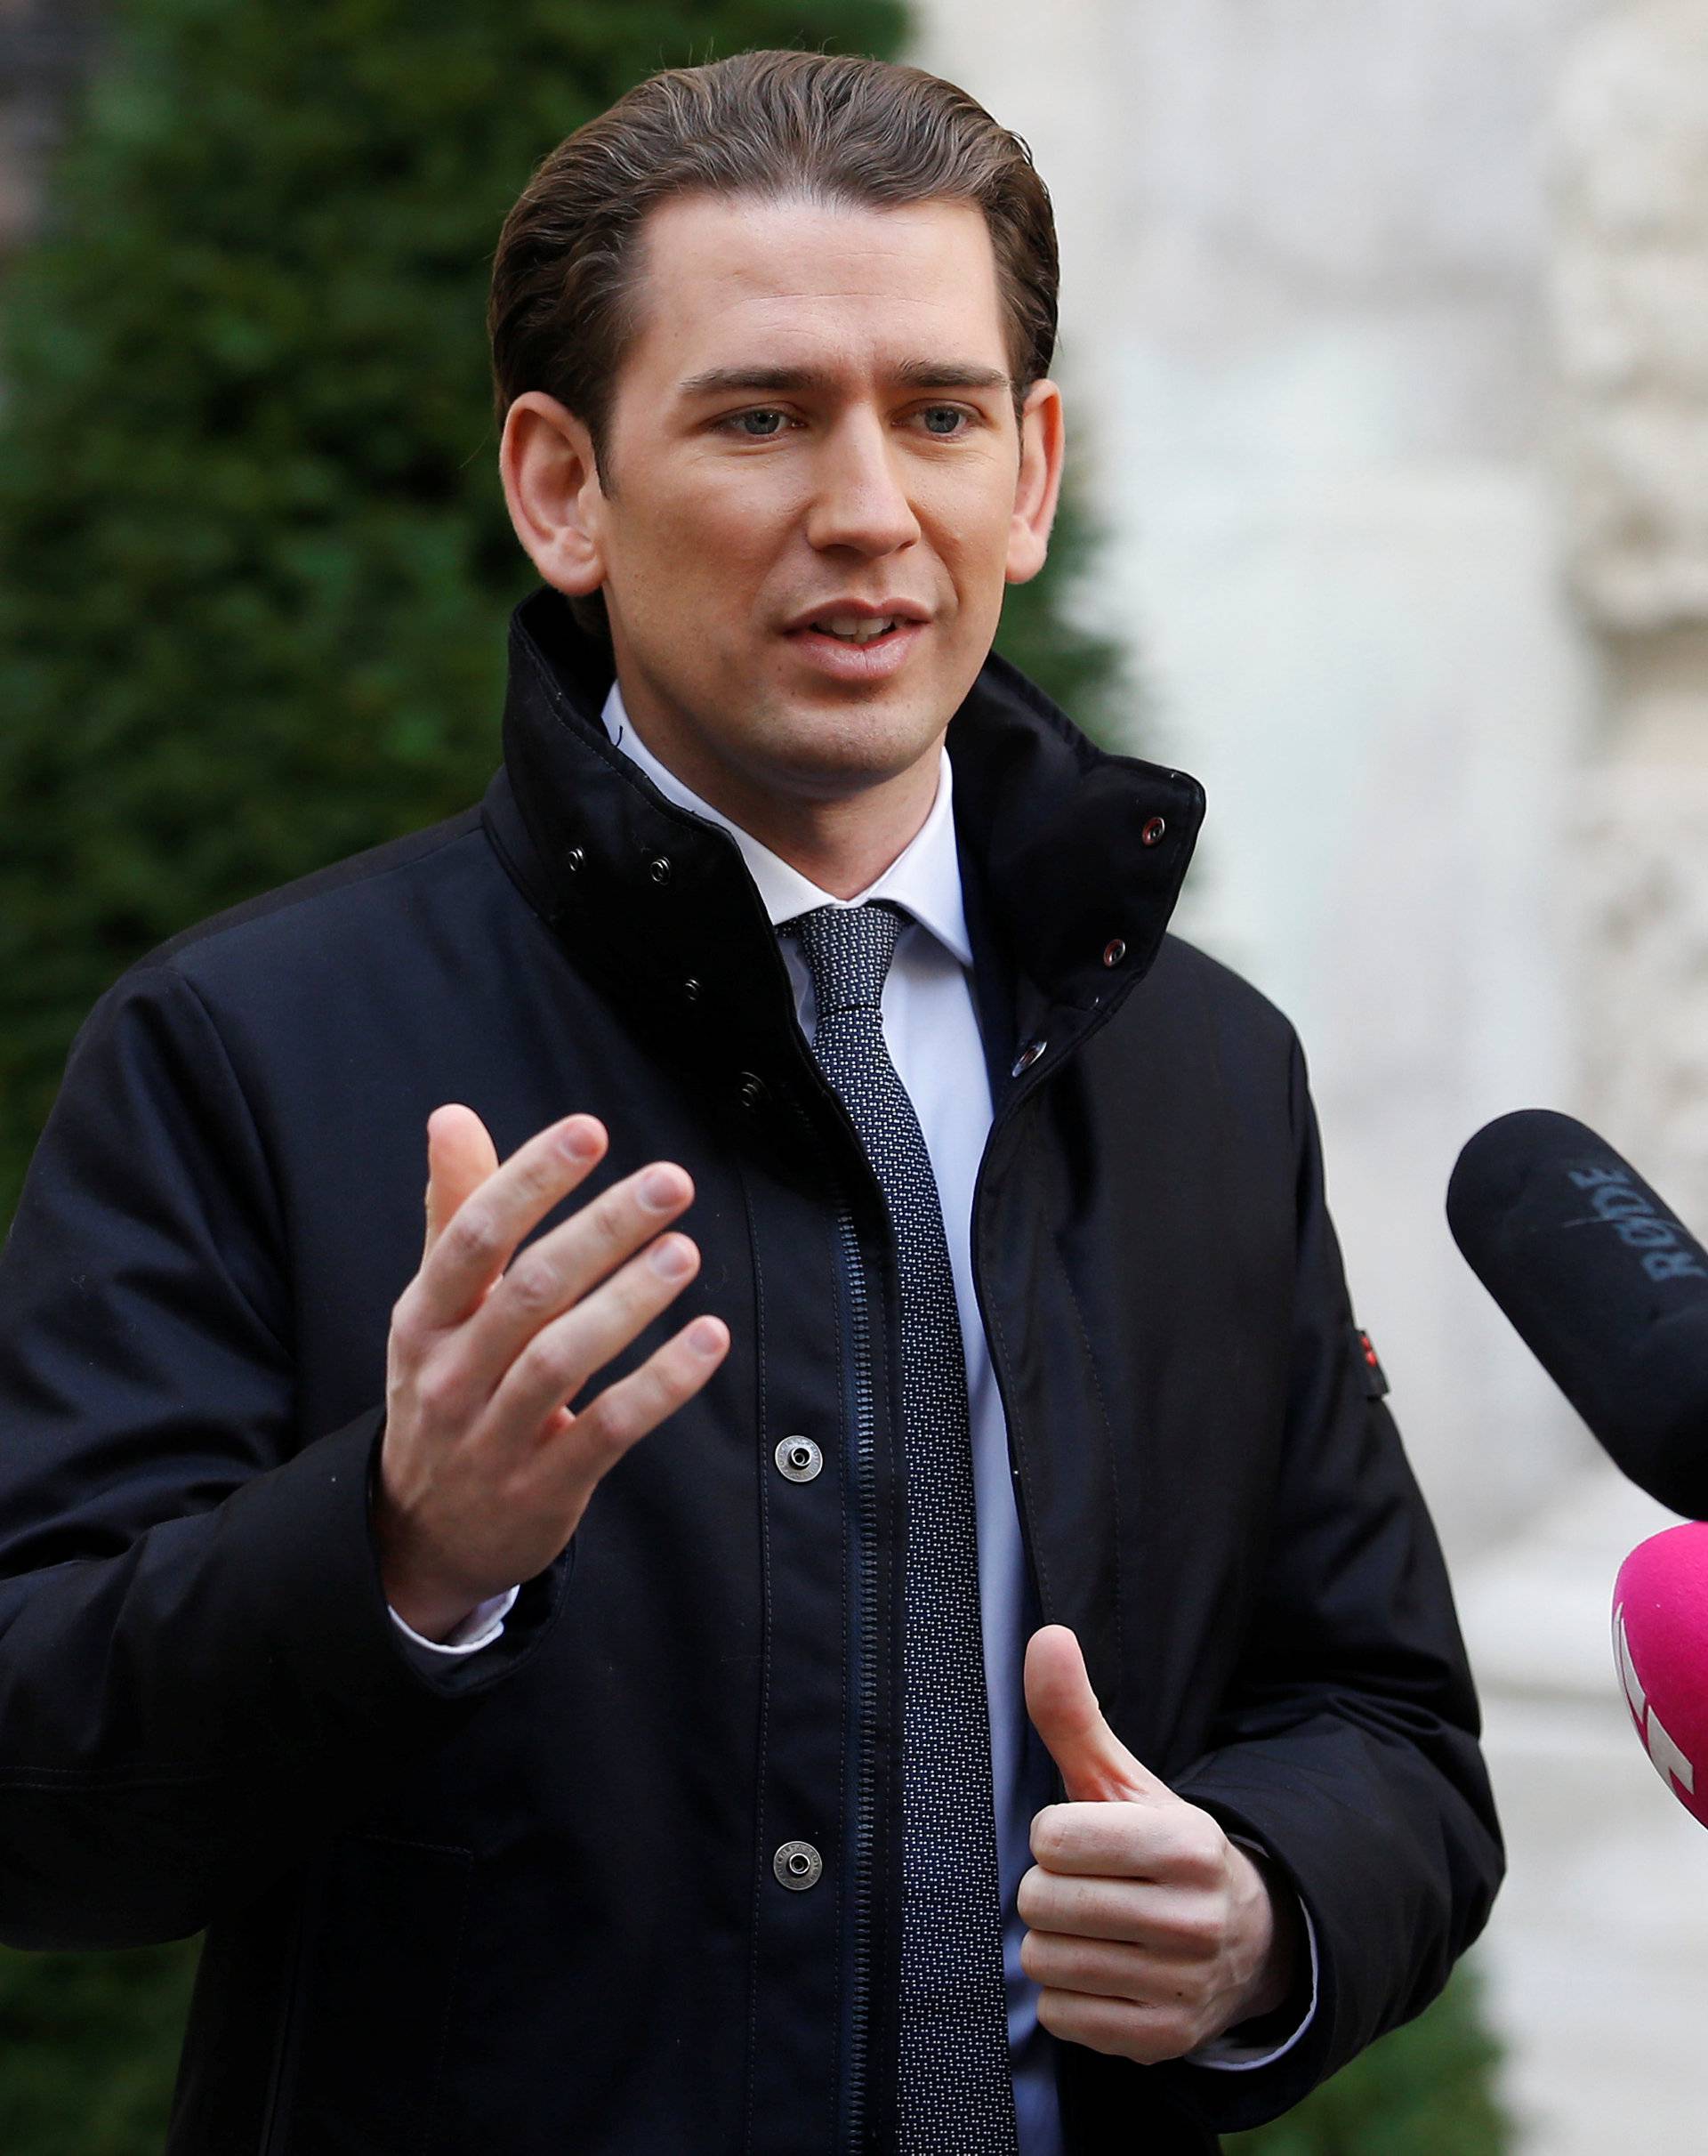 Head of the OeVP Sebastian Kurz addresses the media as he arrives for coalition talks in Vienna